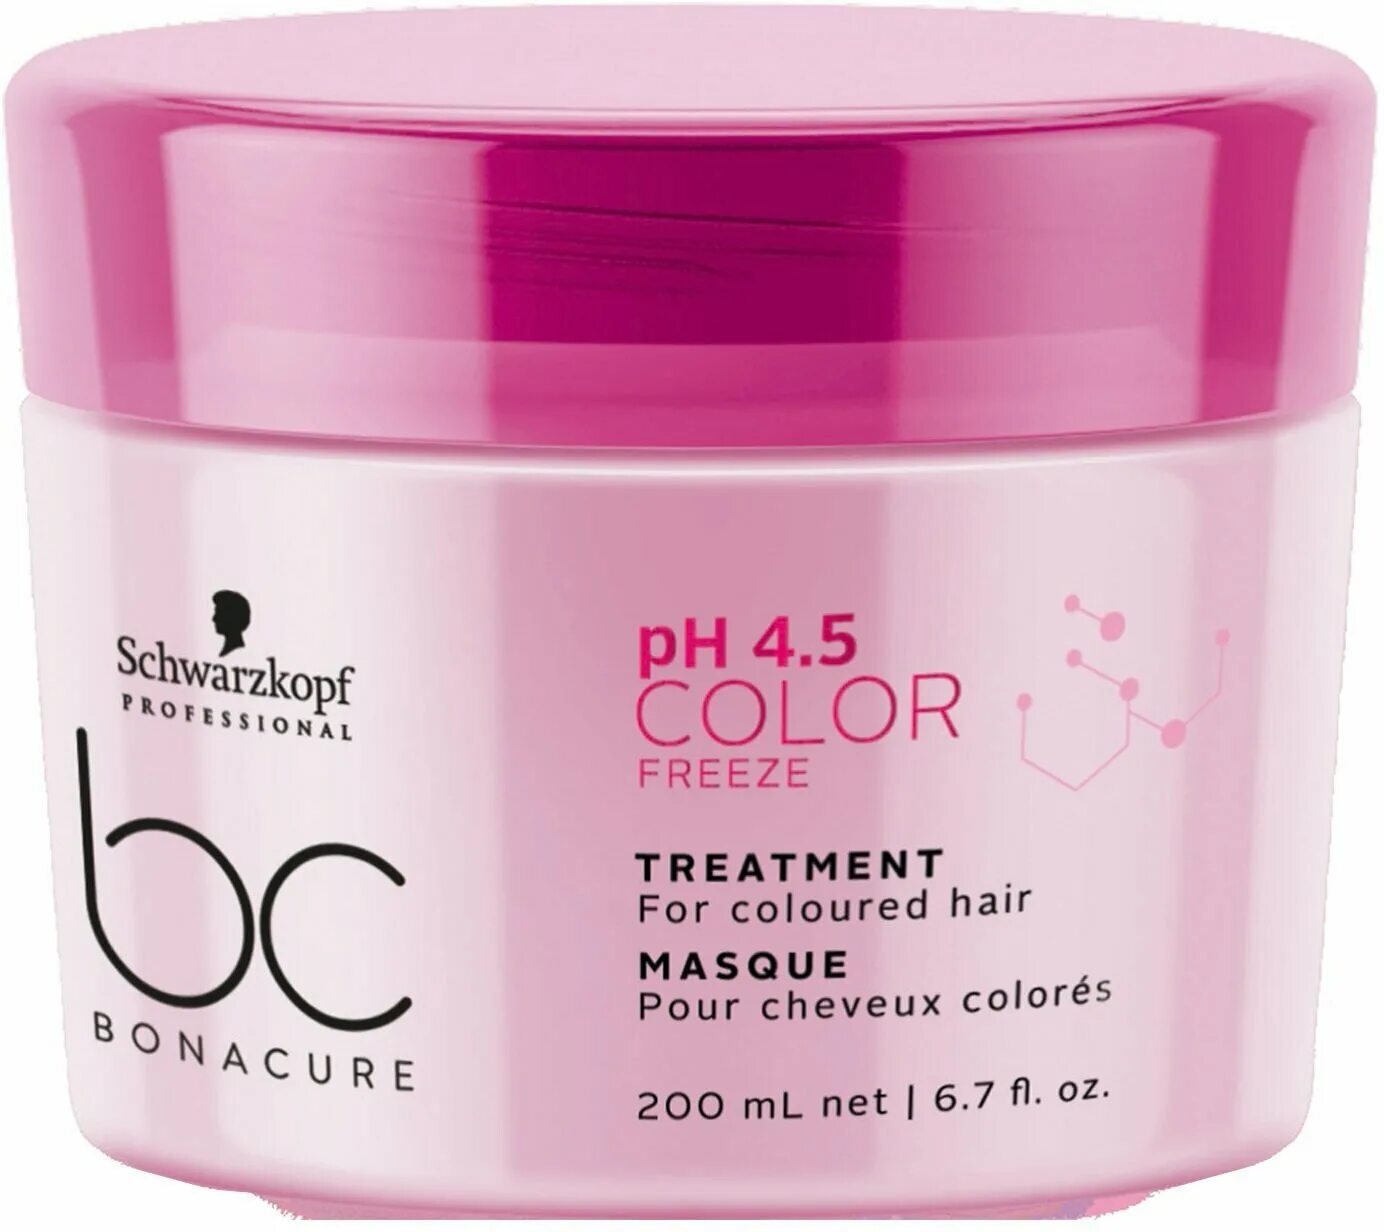 BC PH 4.5 Color Freeze маска 200 мл. BC Bonacure Color Freeze PH 4.5 маска для окрашенных волос. Schwarzkopf professional Bonacure PH 4.5 Color Freeze. Маска PH 4.5 Color Freeze treatment.